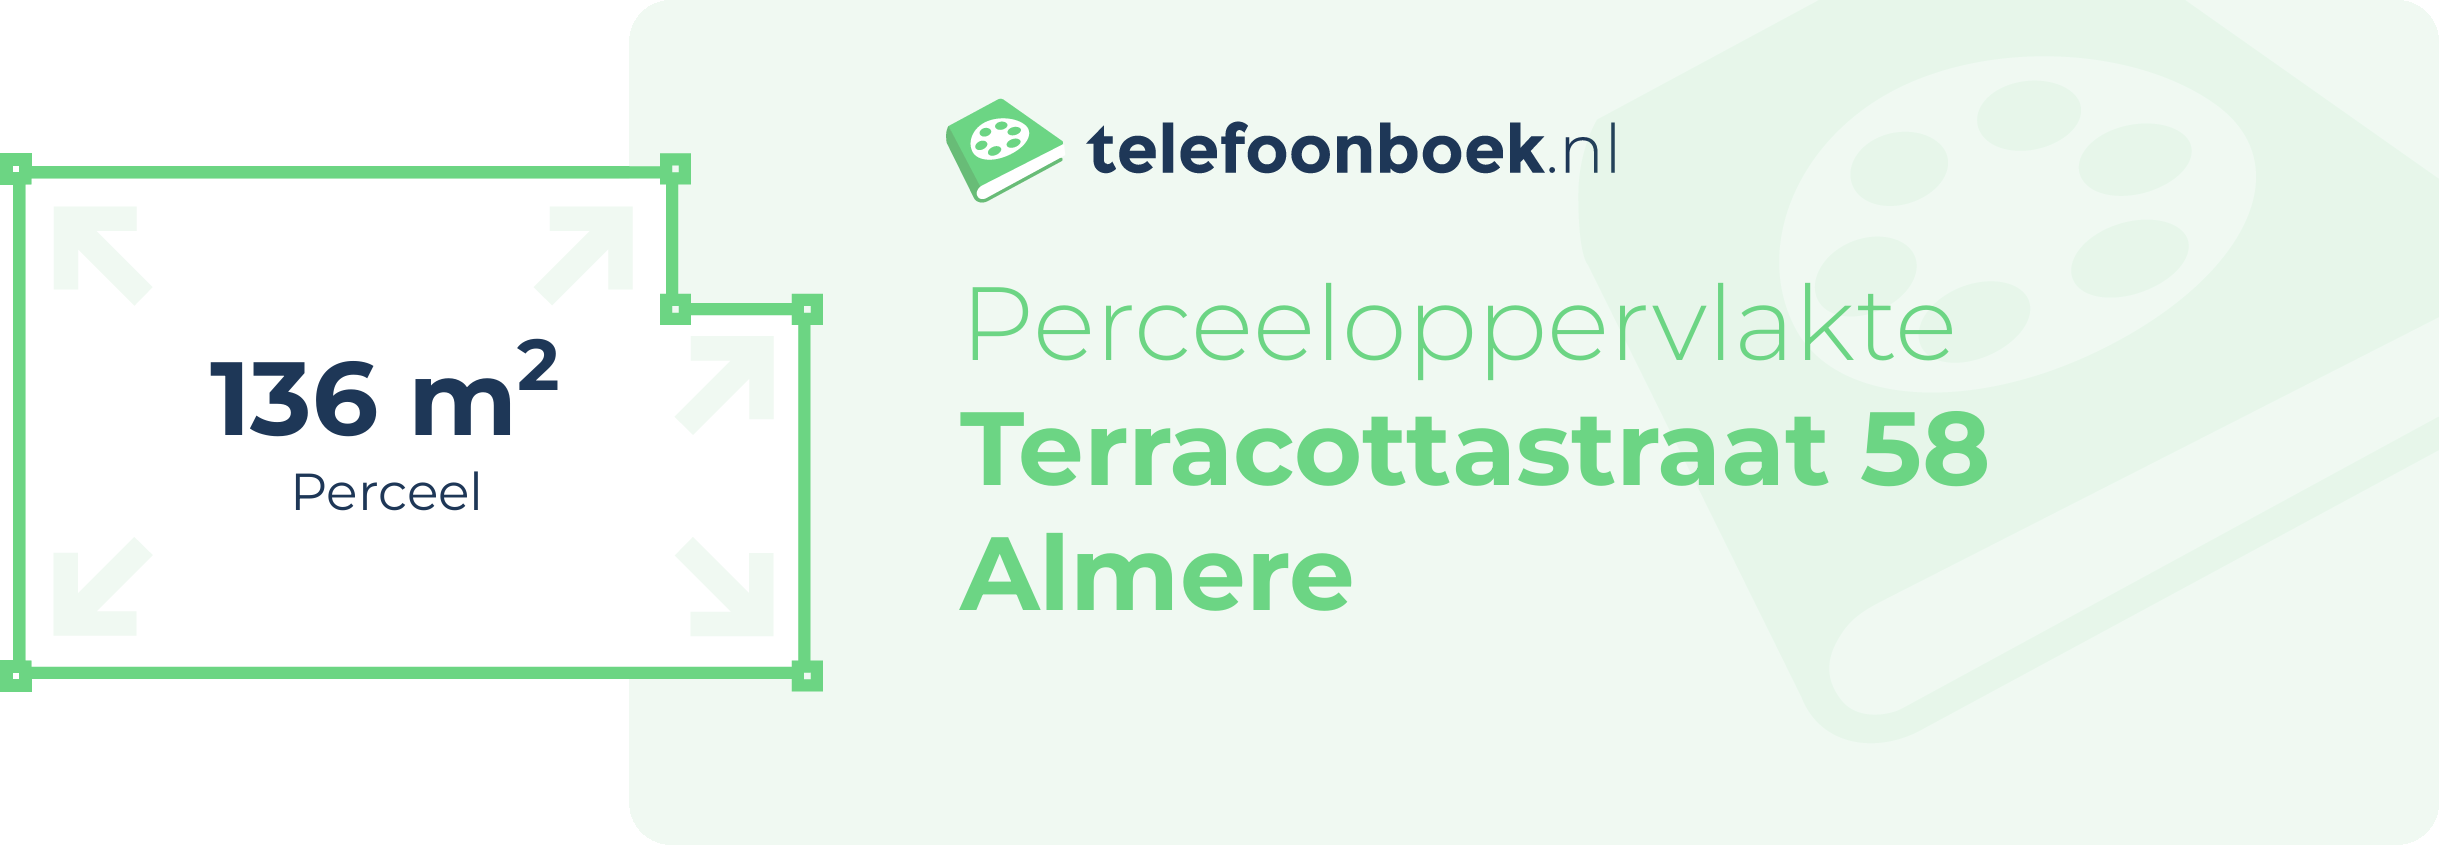 Perceeloppervlakte Terracottastraat 58 Almere